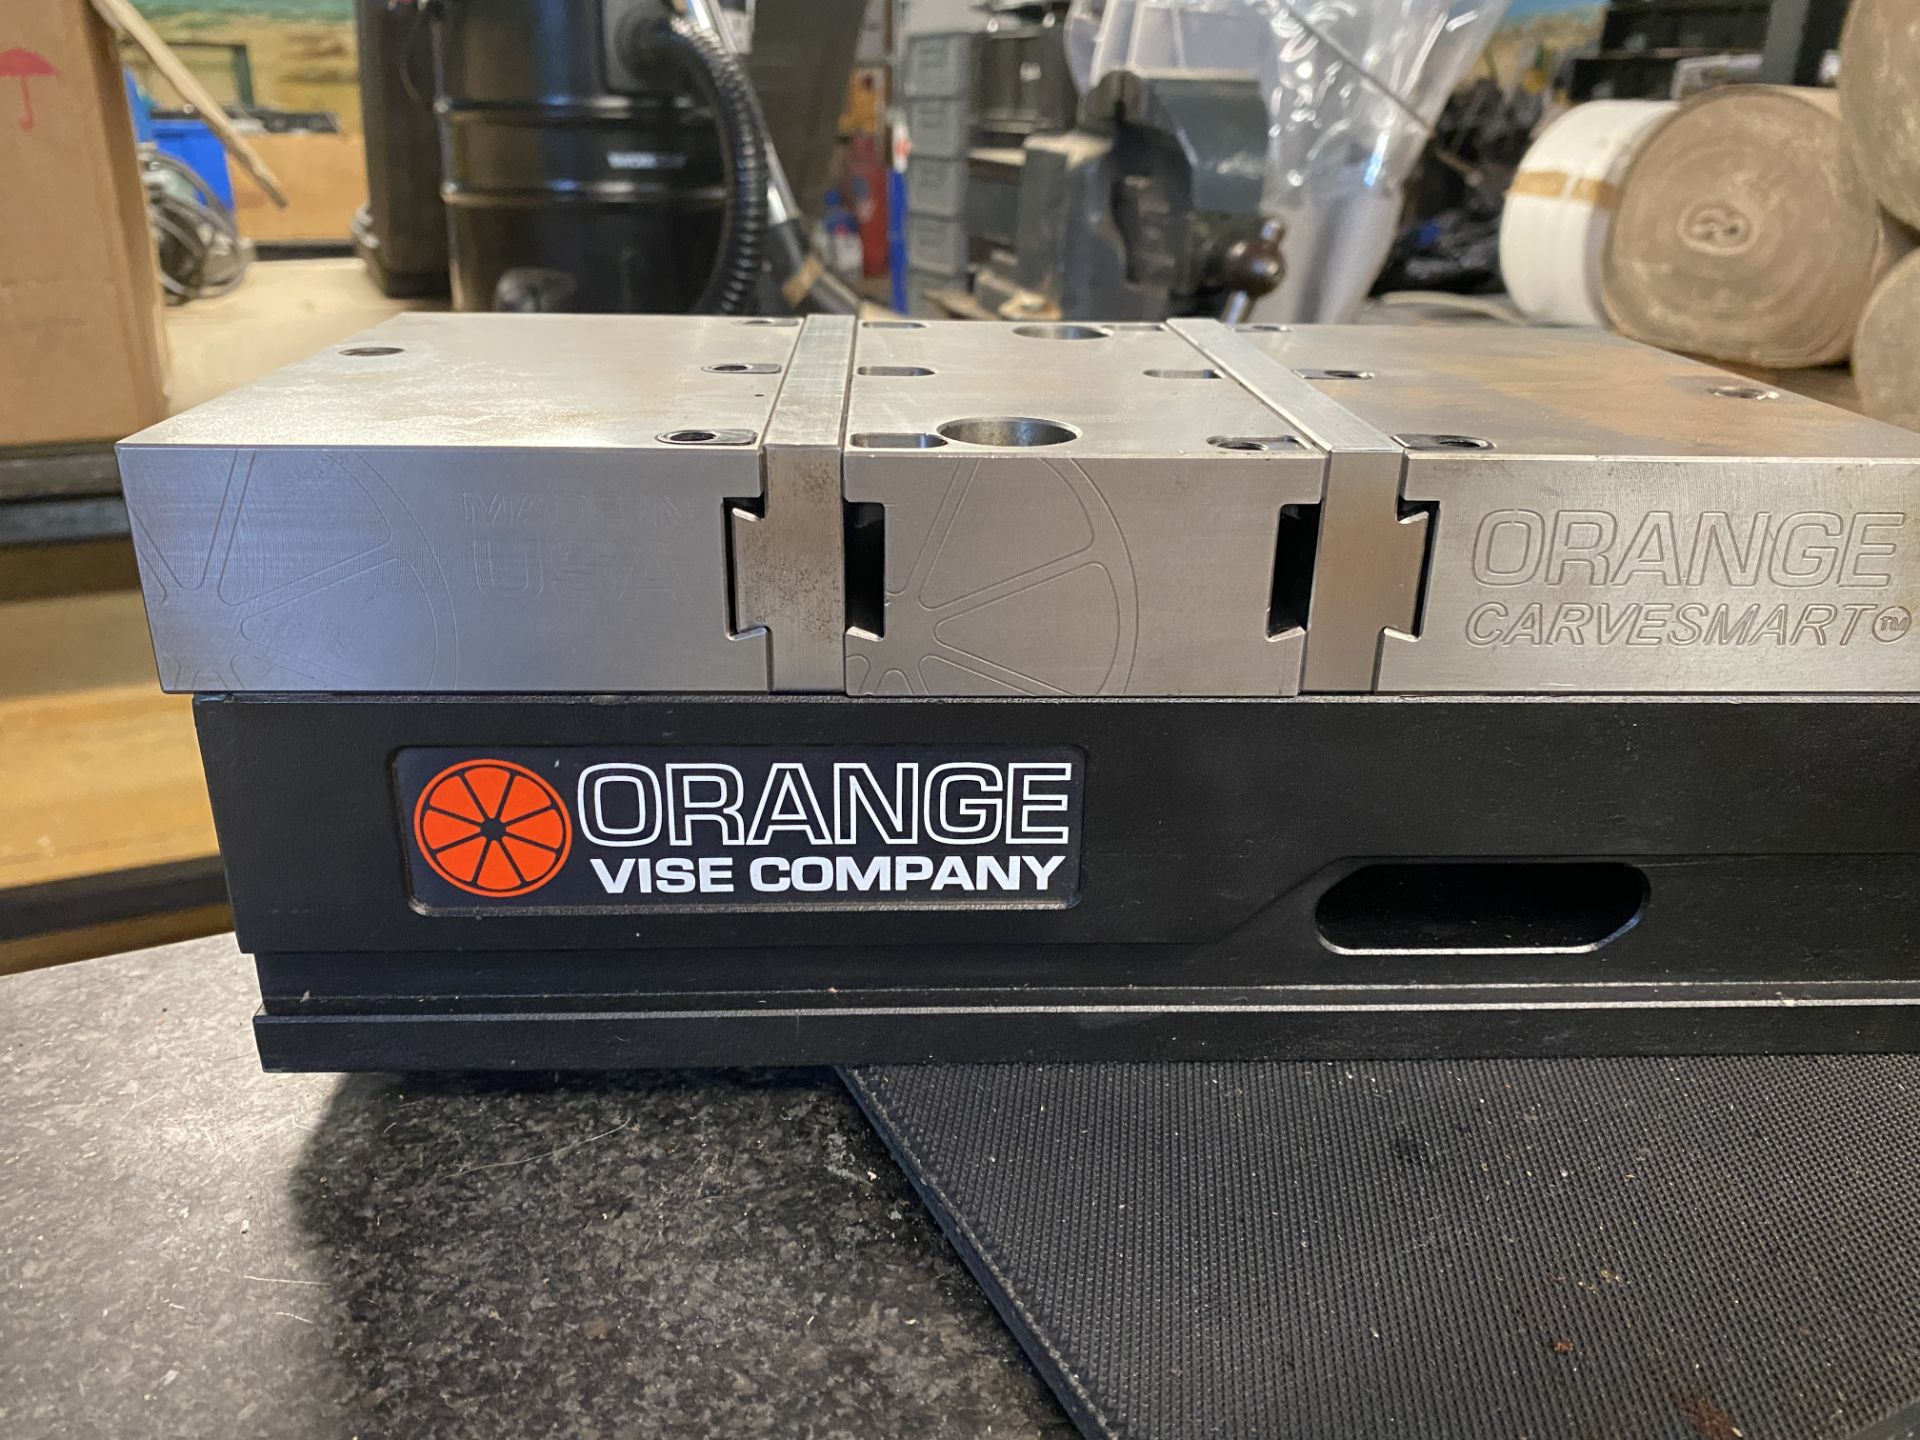 Orange Vise Company 6 x 17.5" CNC Machine Vice with Orange Carve Smart Quick Change Jaws, New - Image 9 of 9